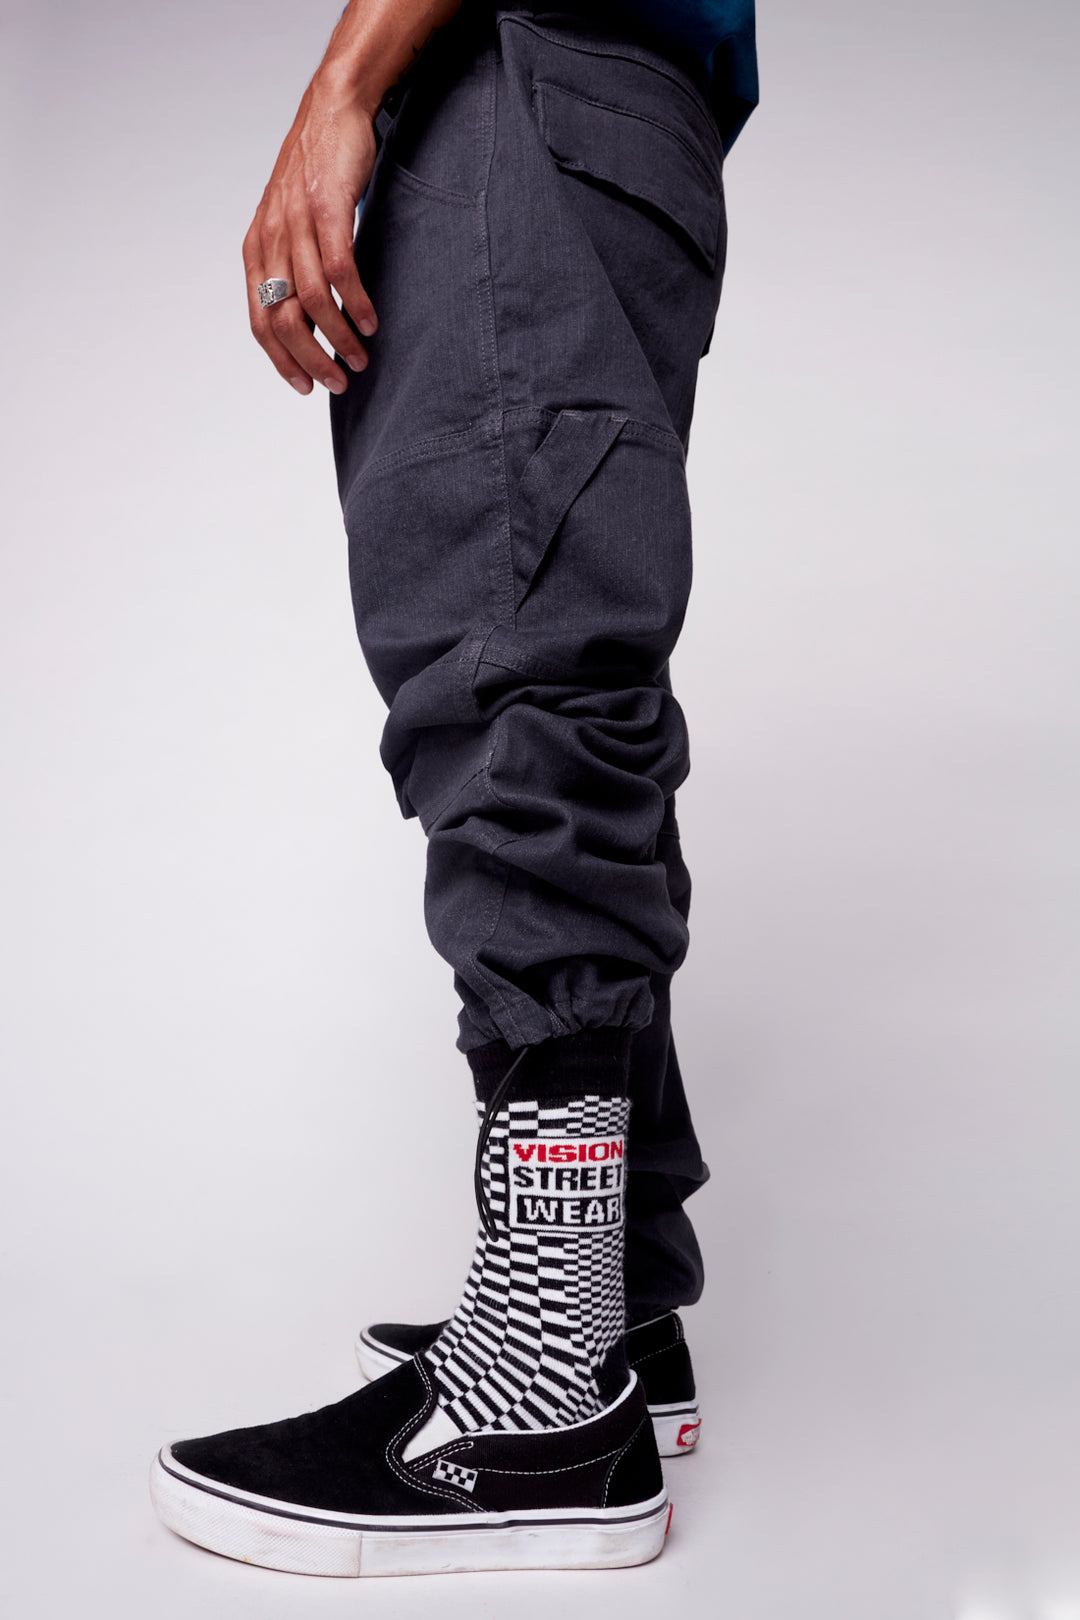 Vision Street Wear Broken Checks Pattern Skateboard Sports Socks Black & Ivory